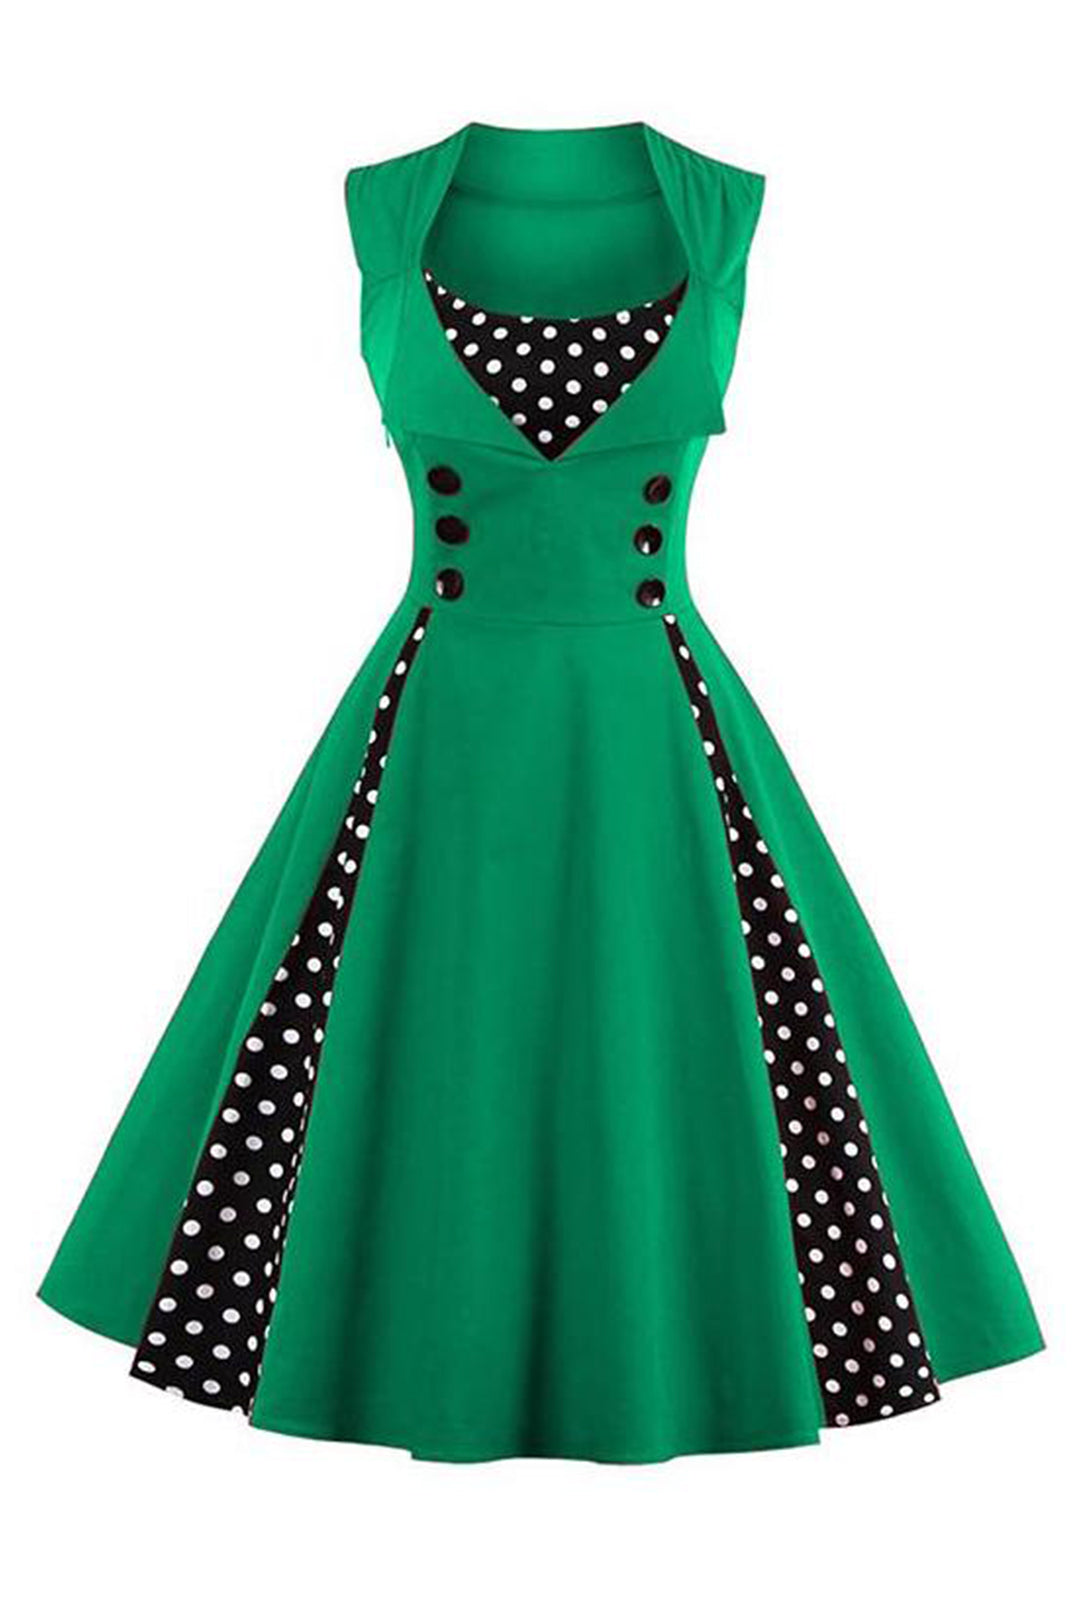 Green Polka Dot 1950's Swing Dress